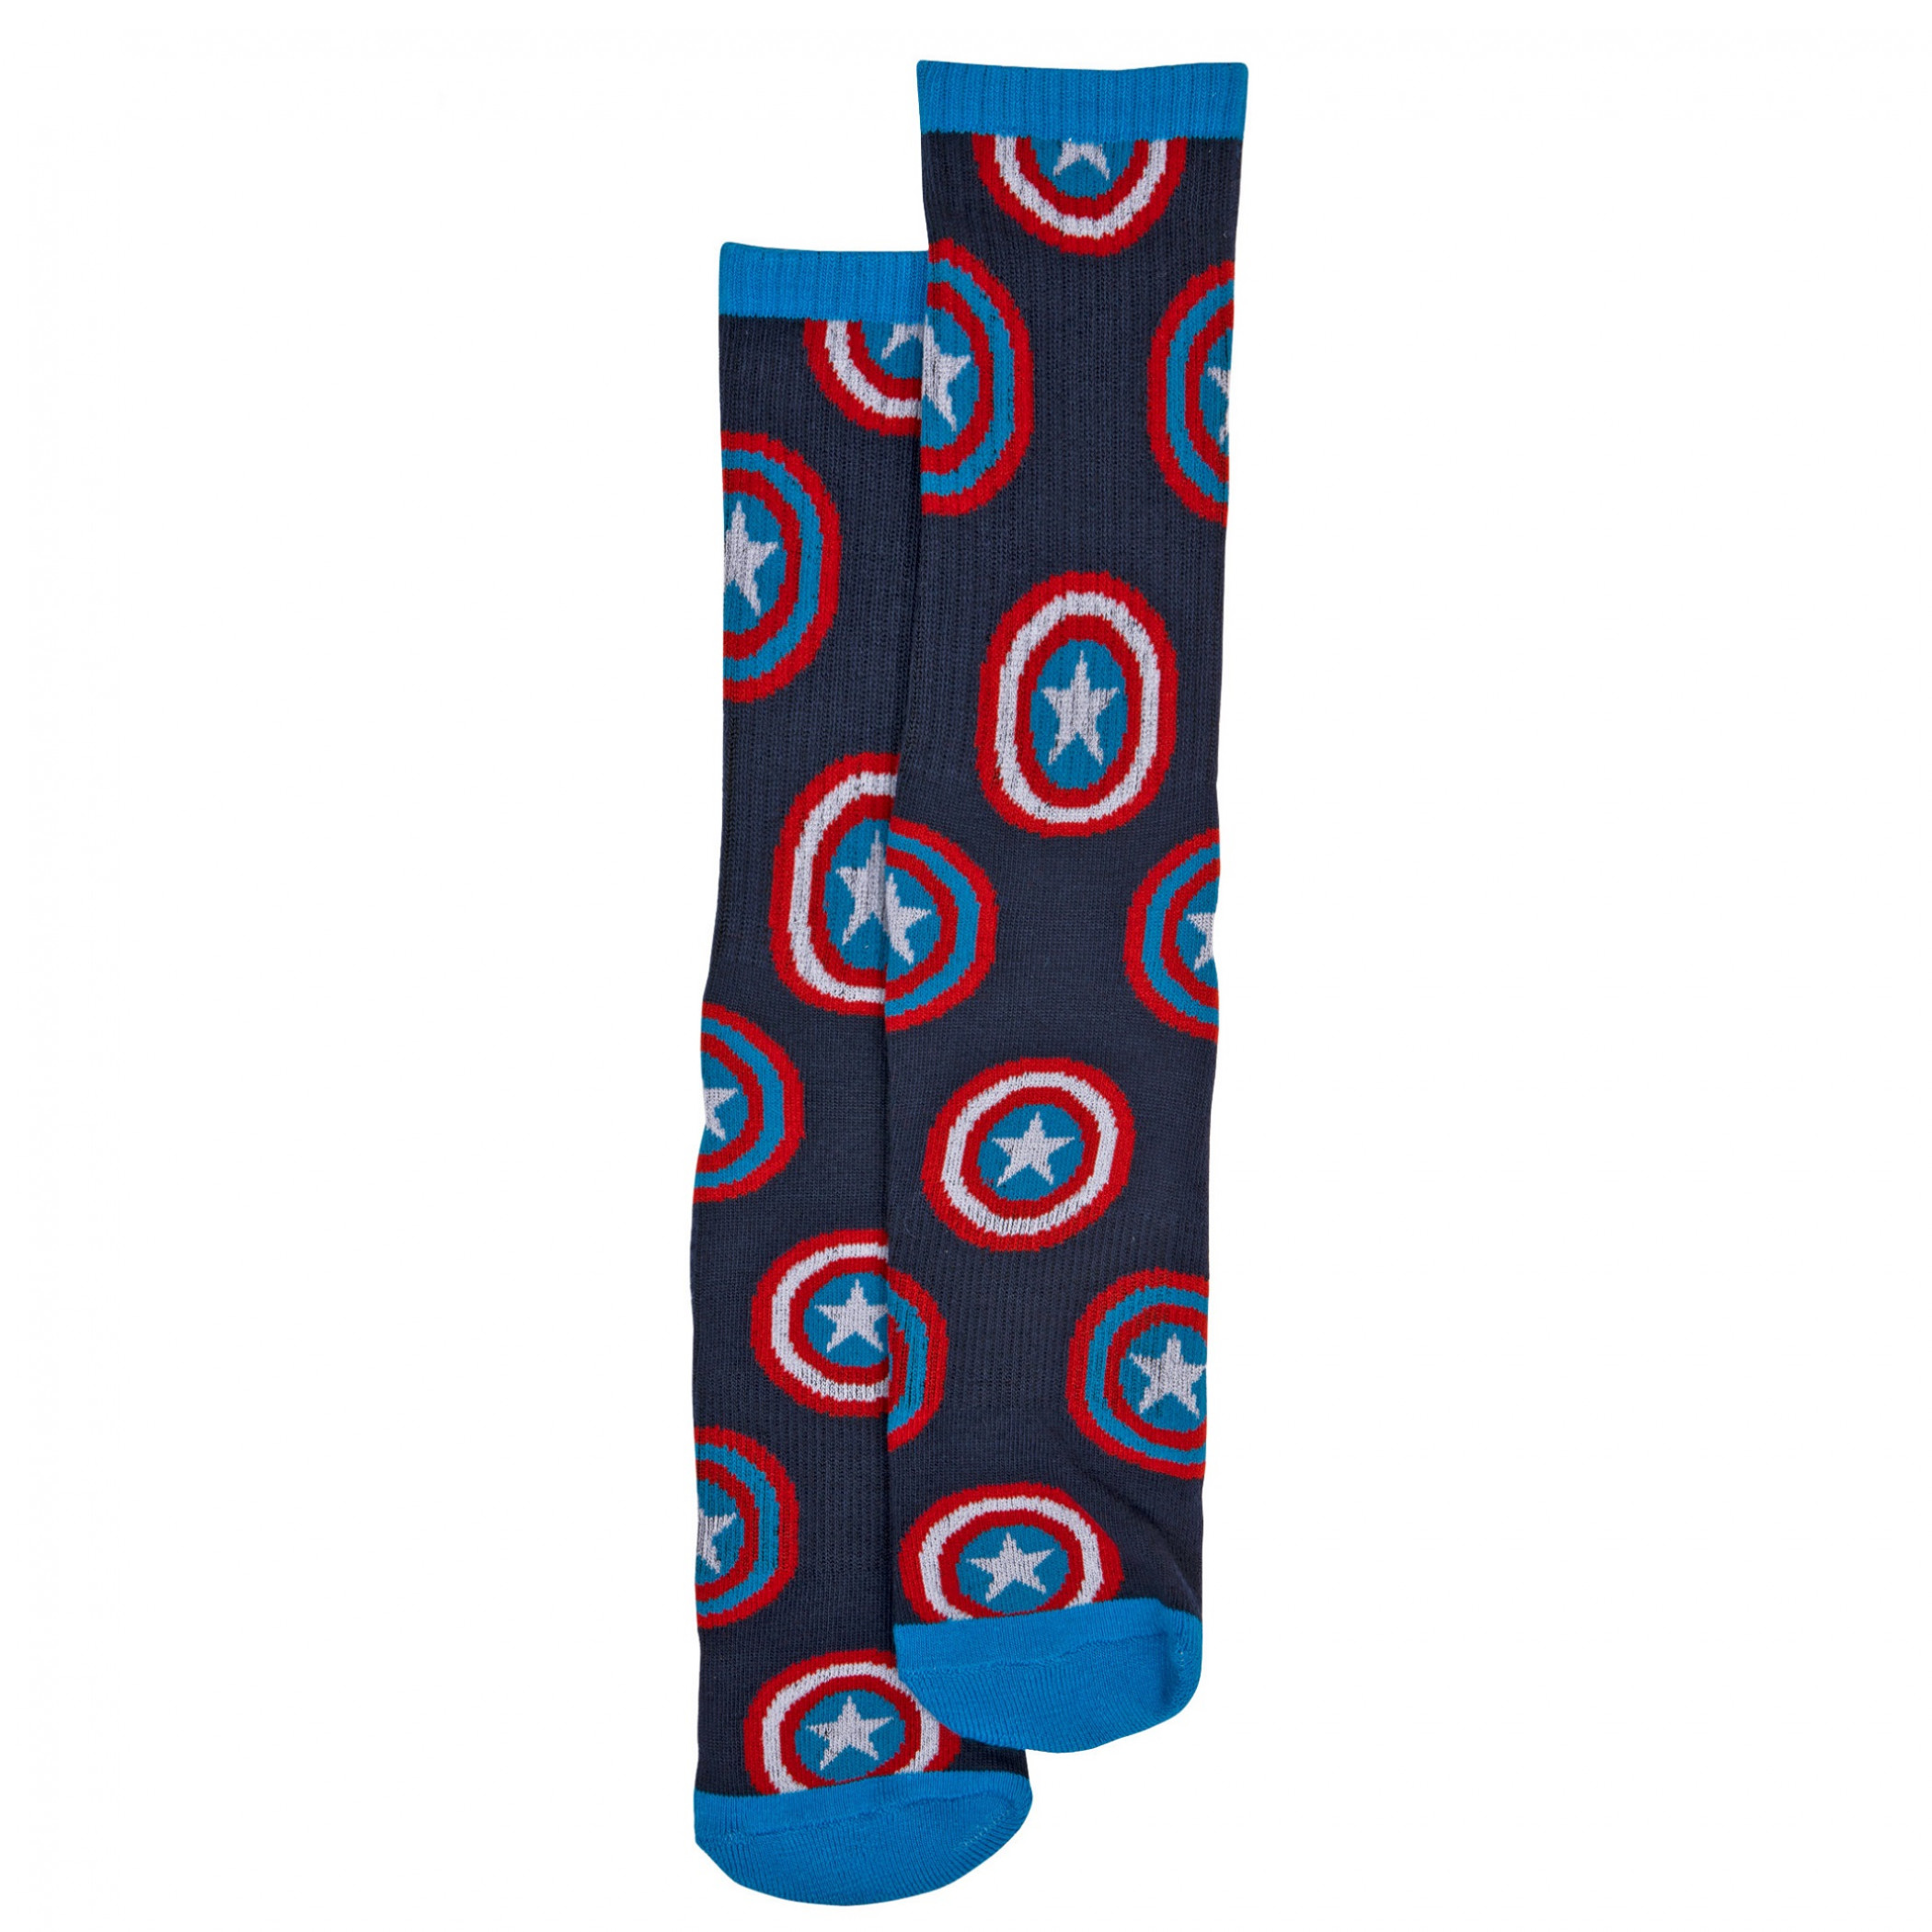 Captain America Shield Symbols Repeating Athletic Socks